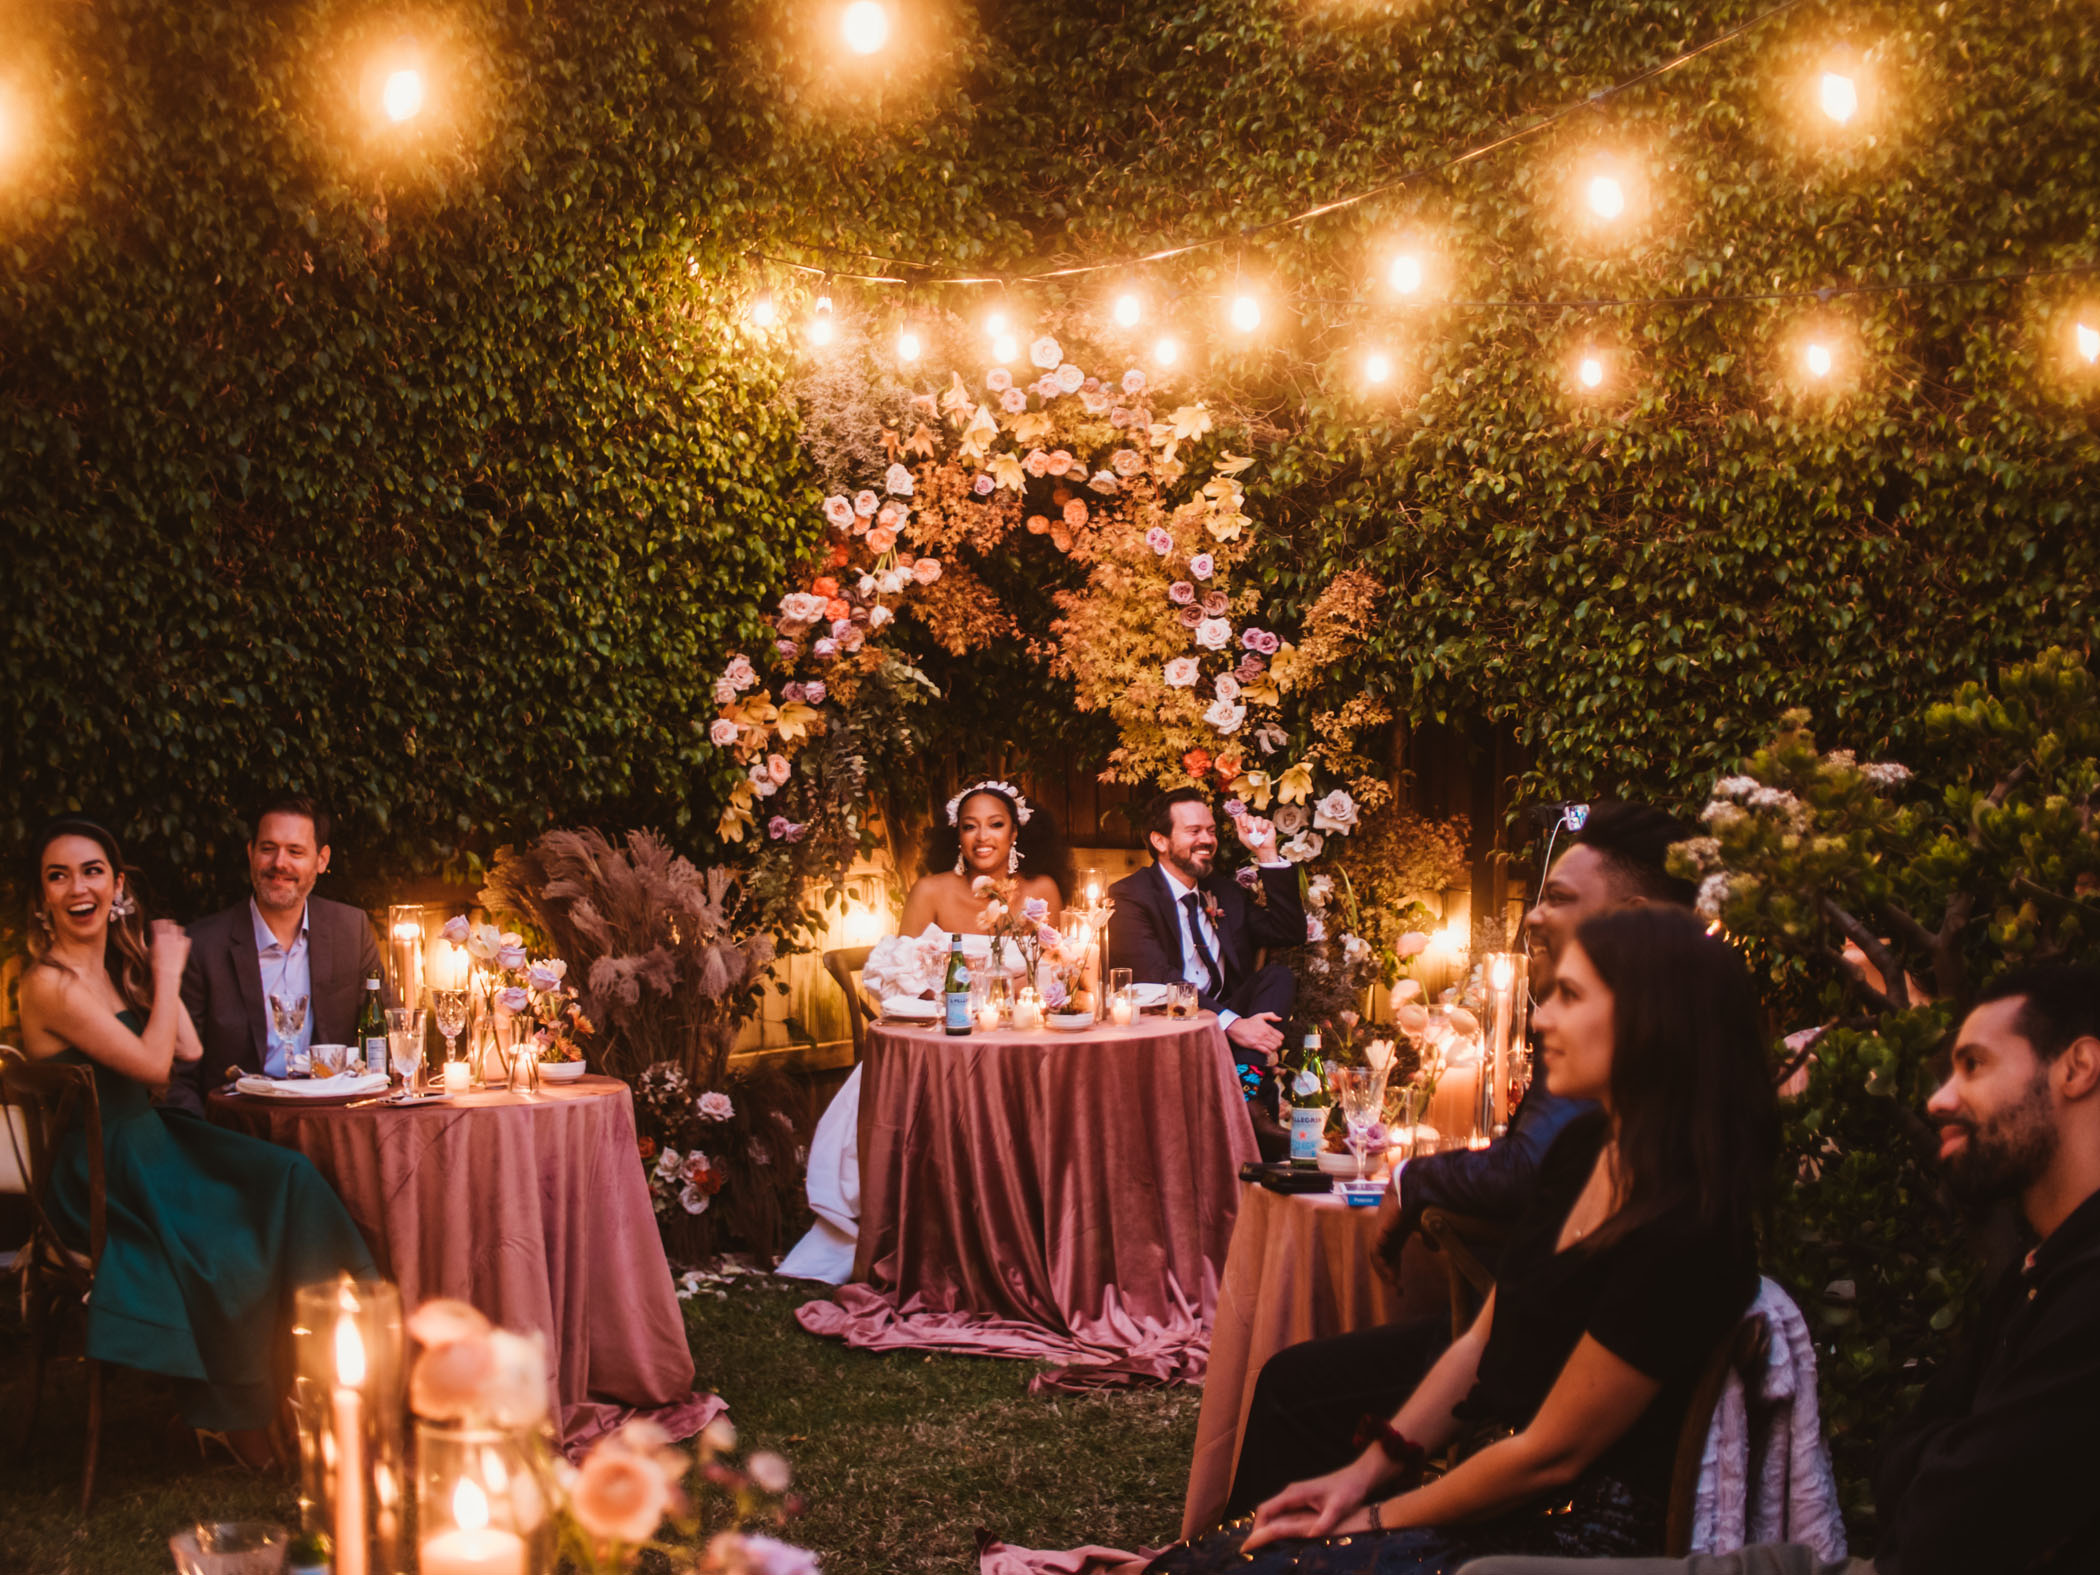 Intimate backyard wedding reception